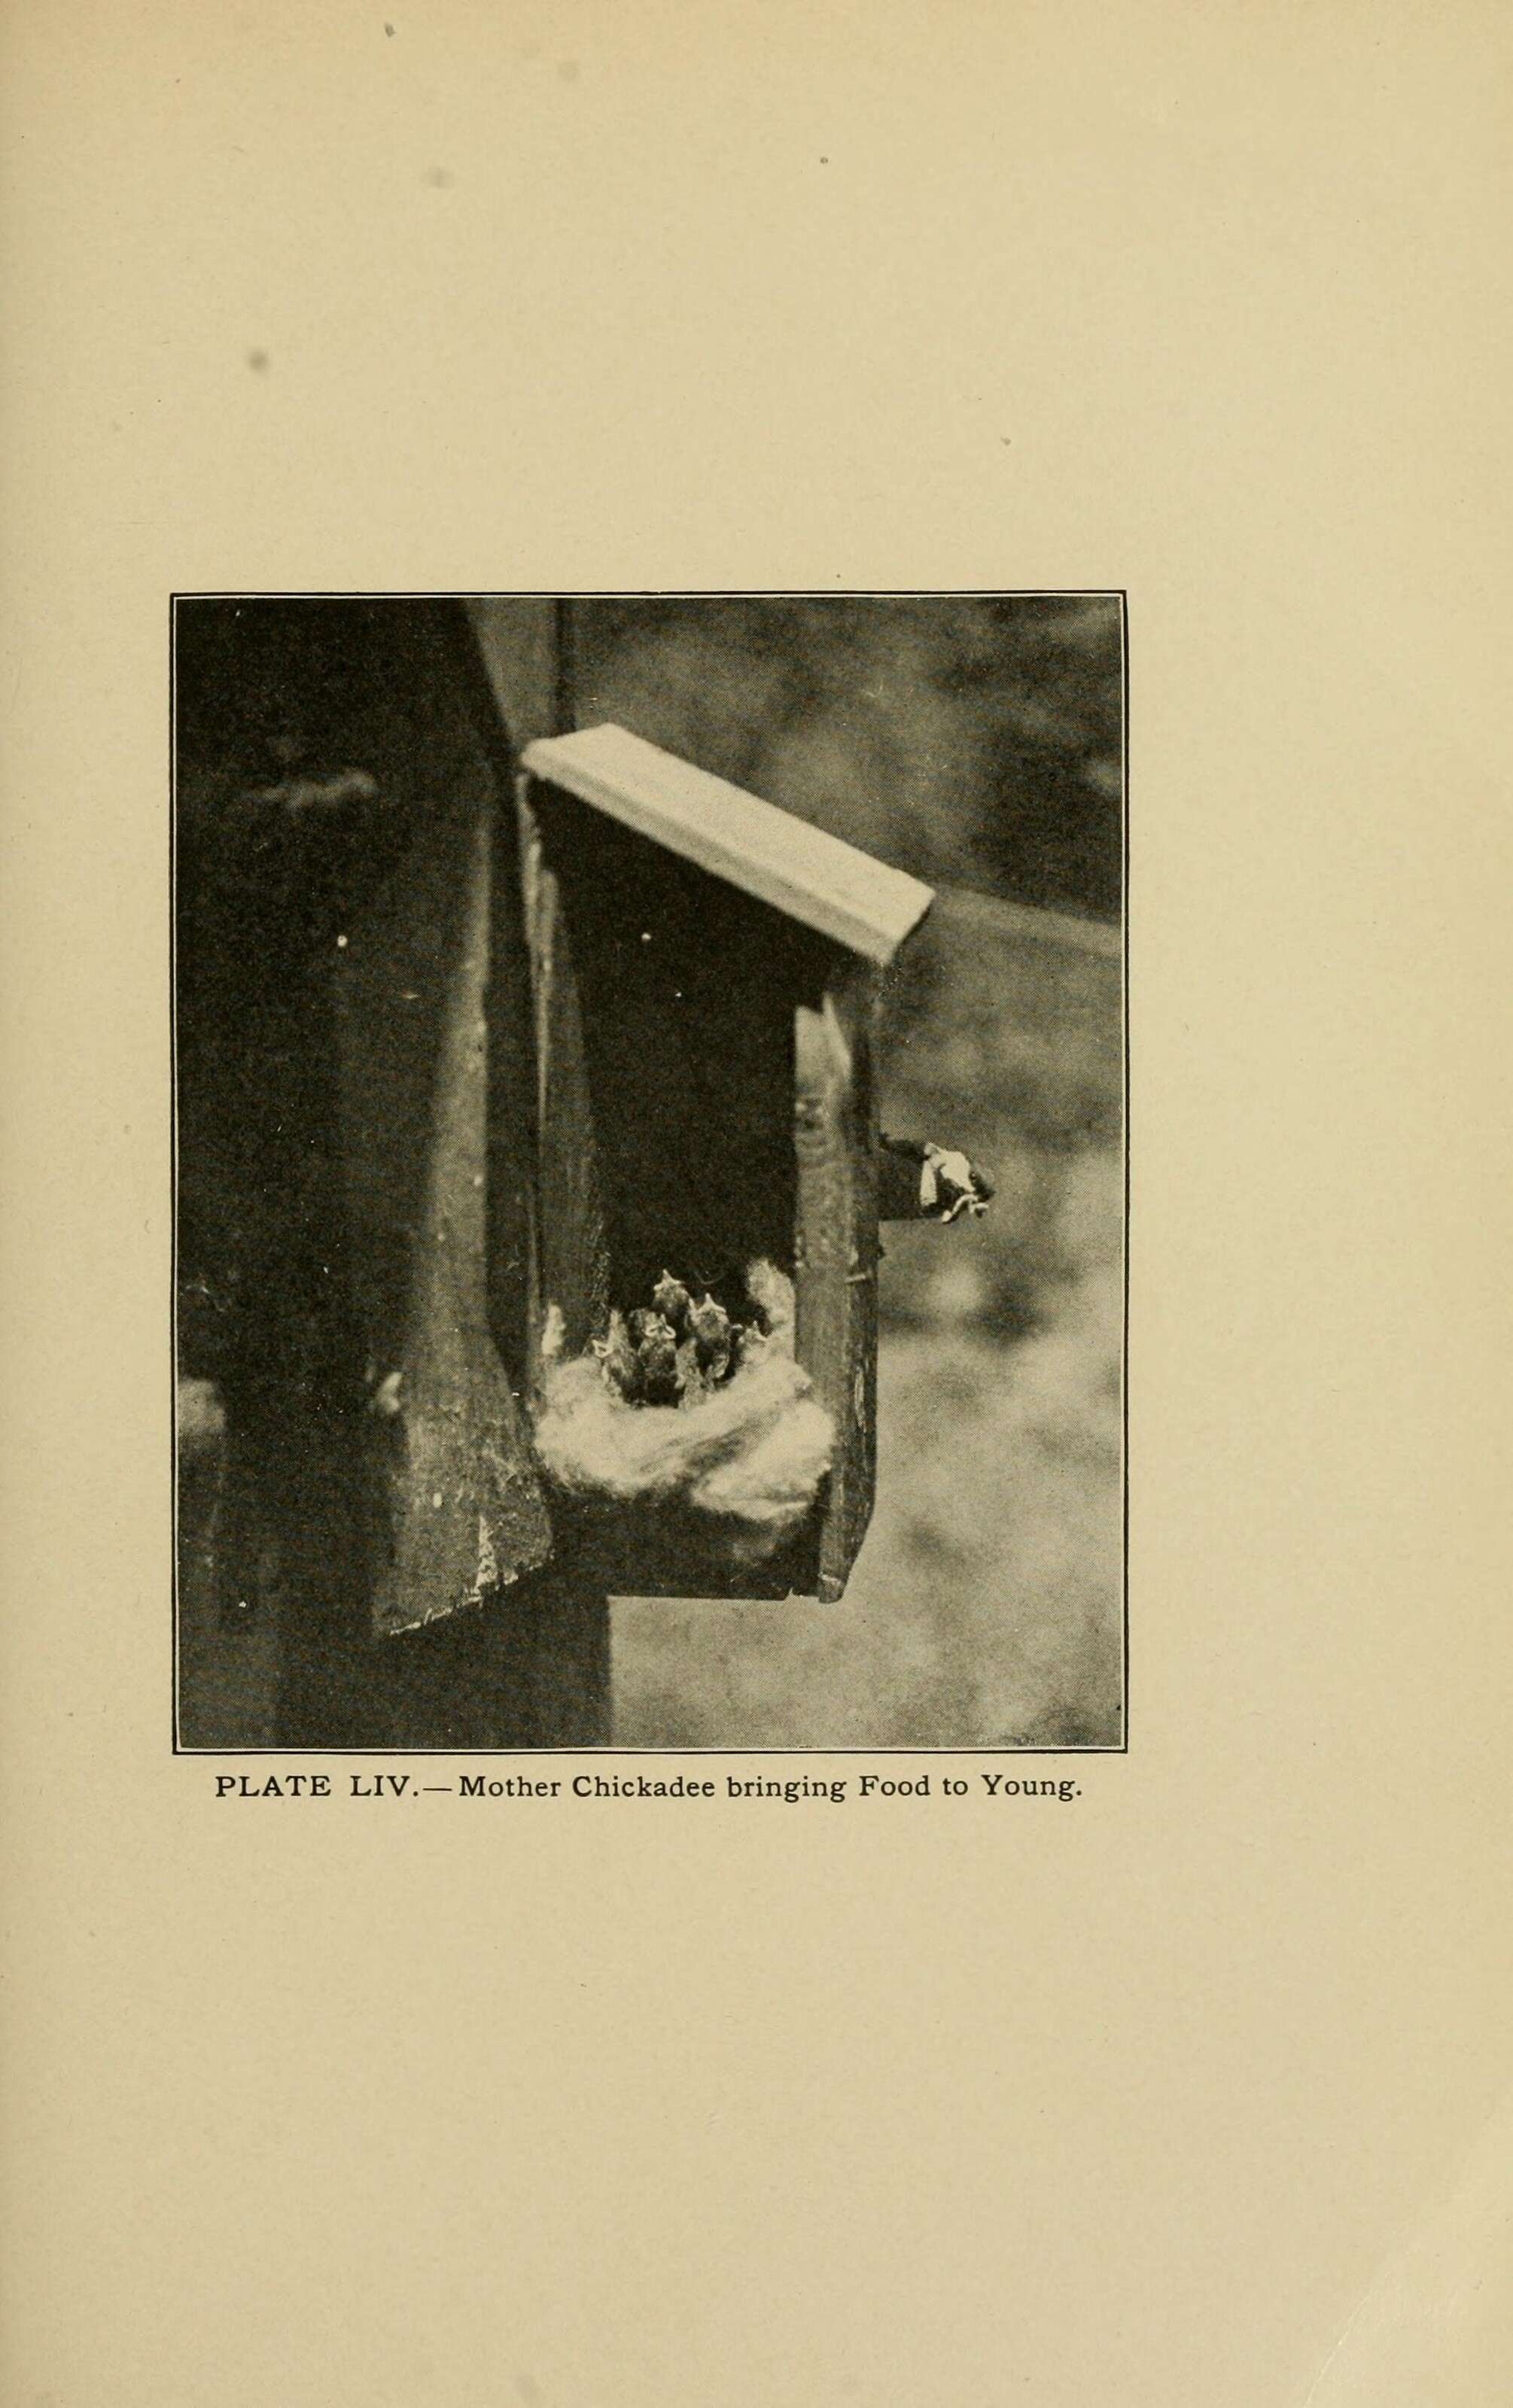 Image of Black-Capped Chickadee